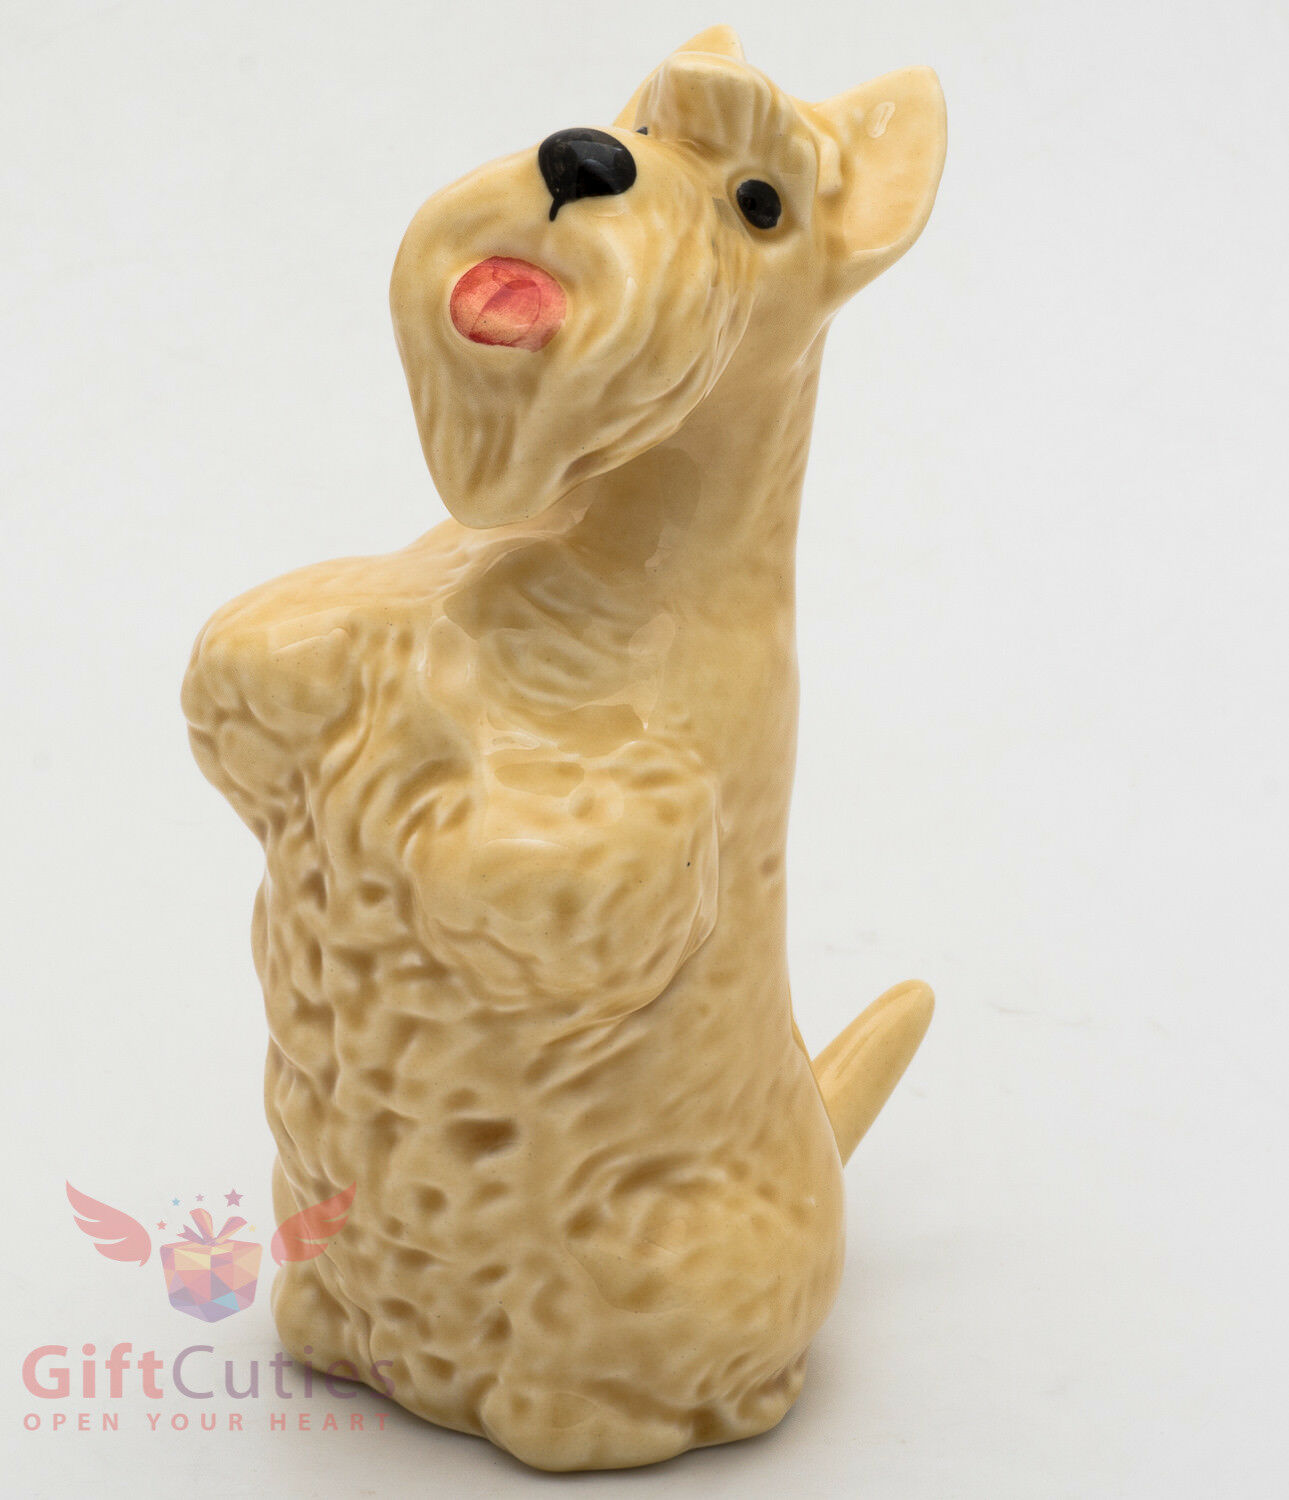 Porcelain Figurine Of The Scottish Terrier Dog